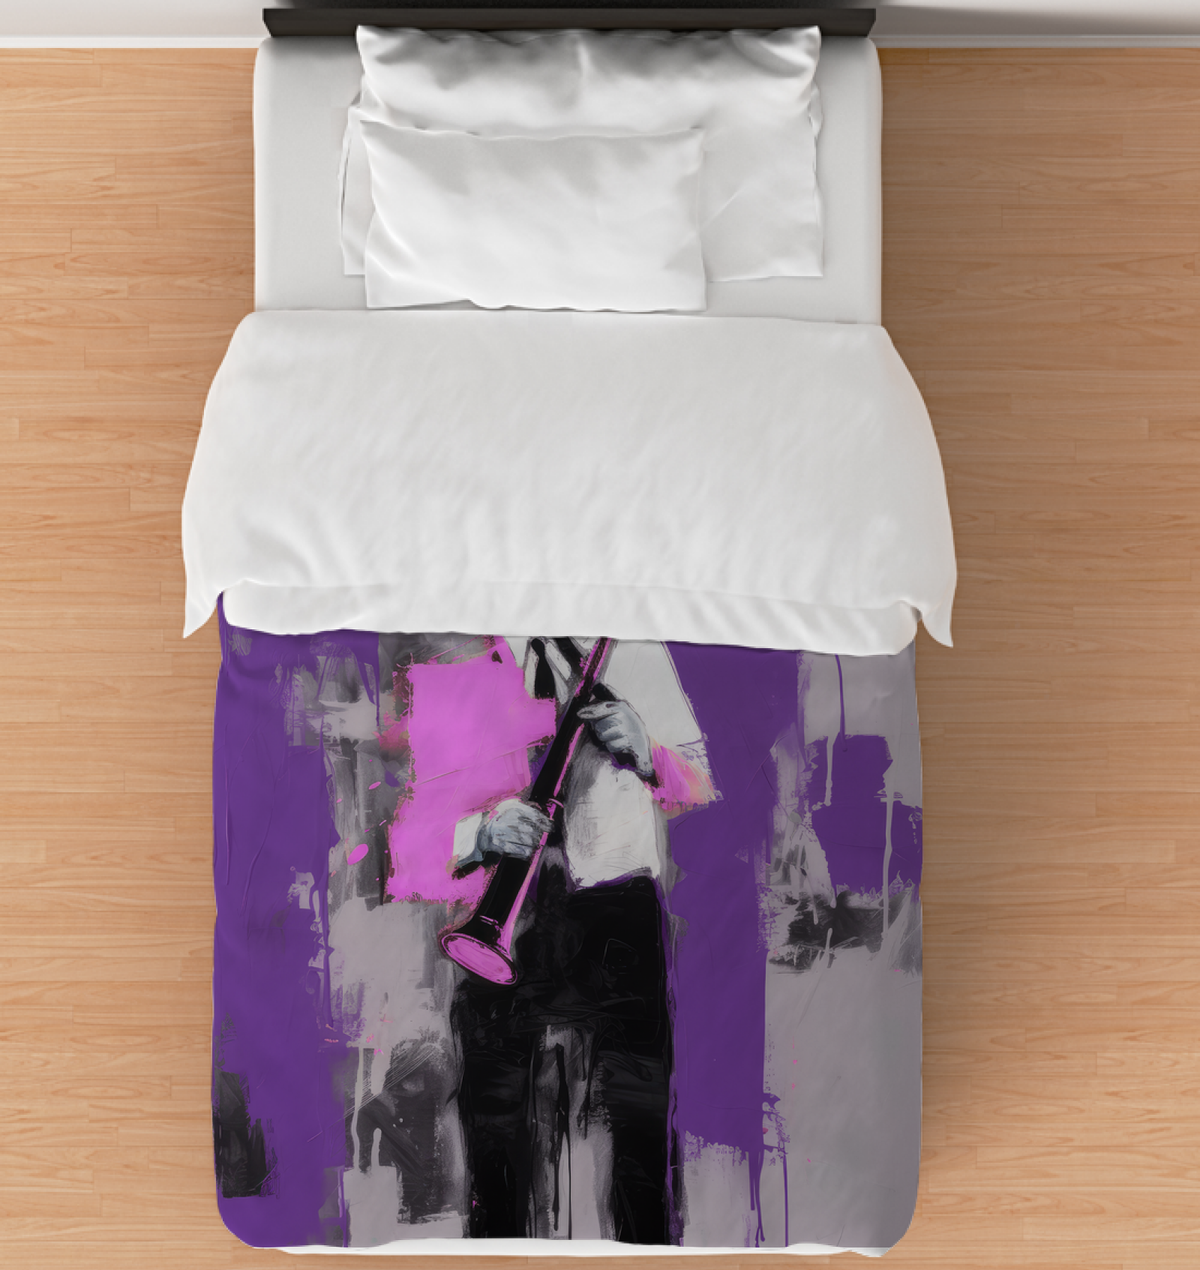 Urban Edge Comforter showcasing its modern and stylish design.